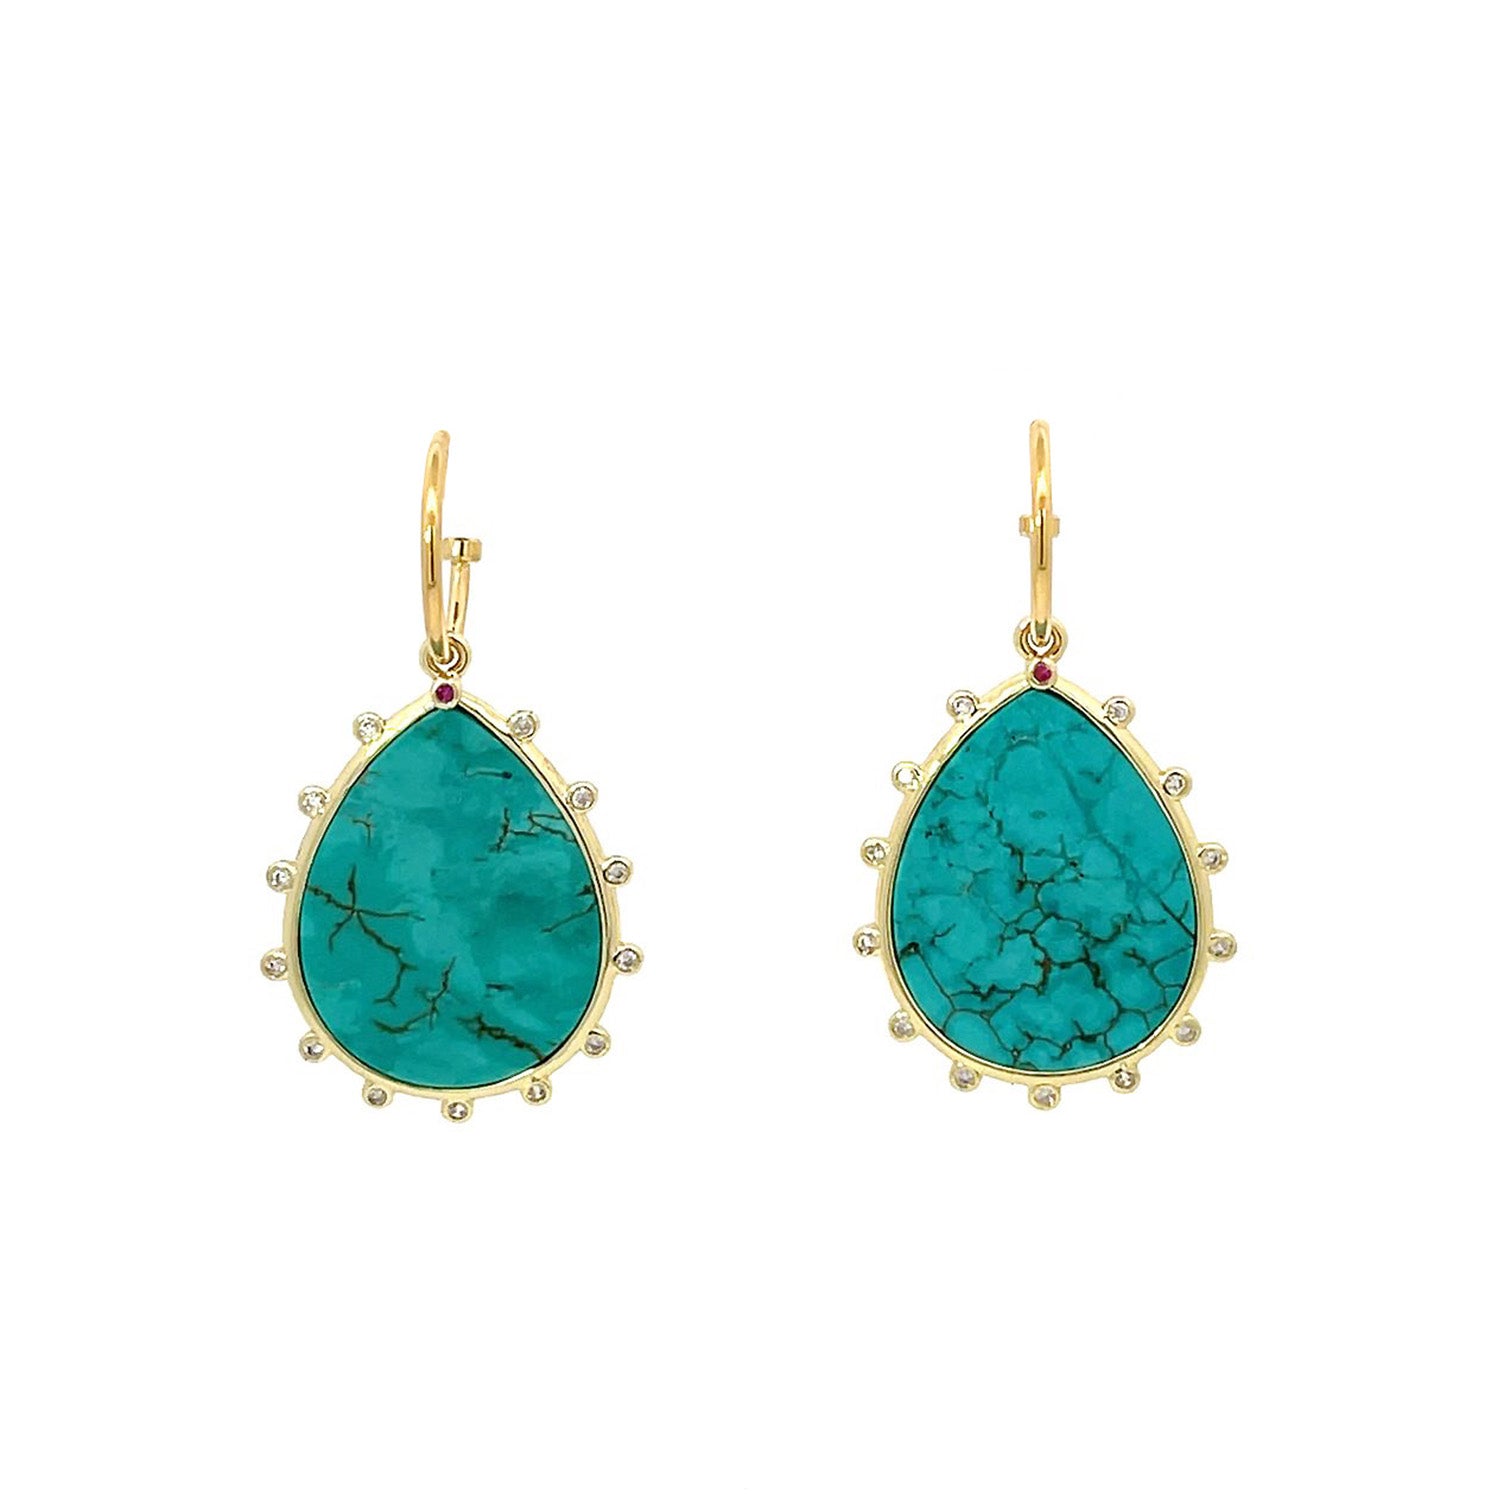 Stylish Turquoise Drop Earrings by Gosia Orlowska